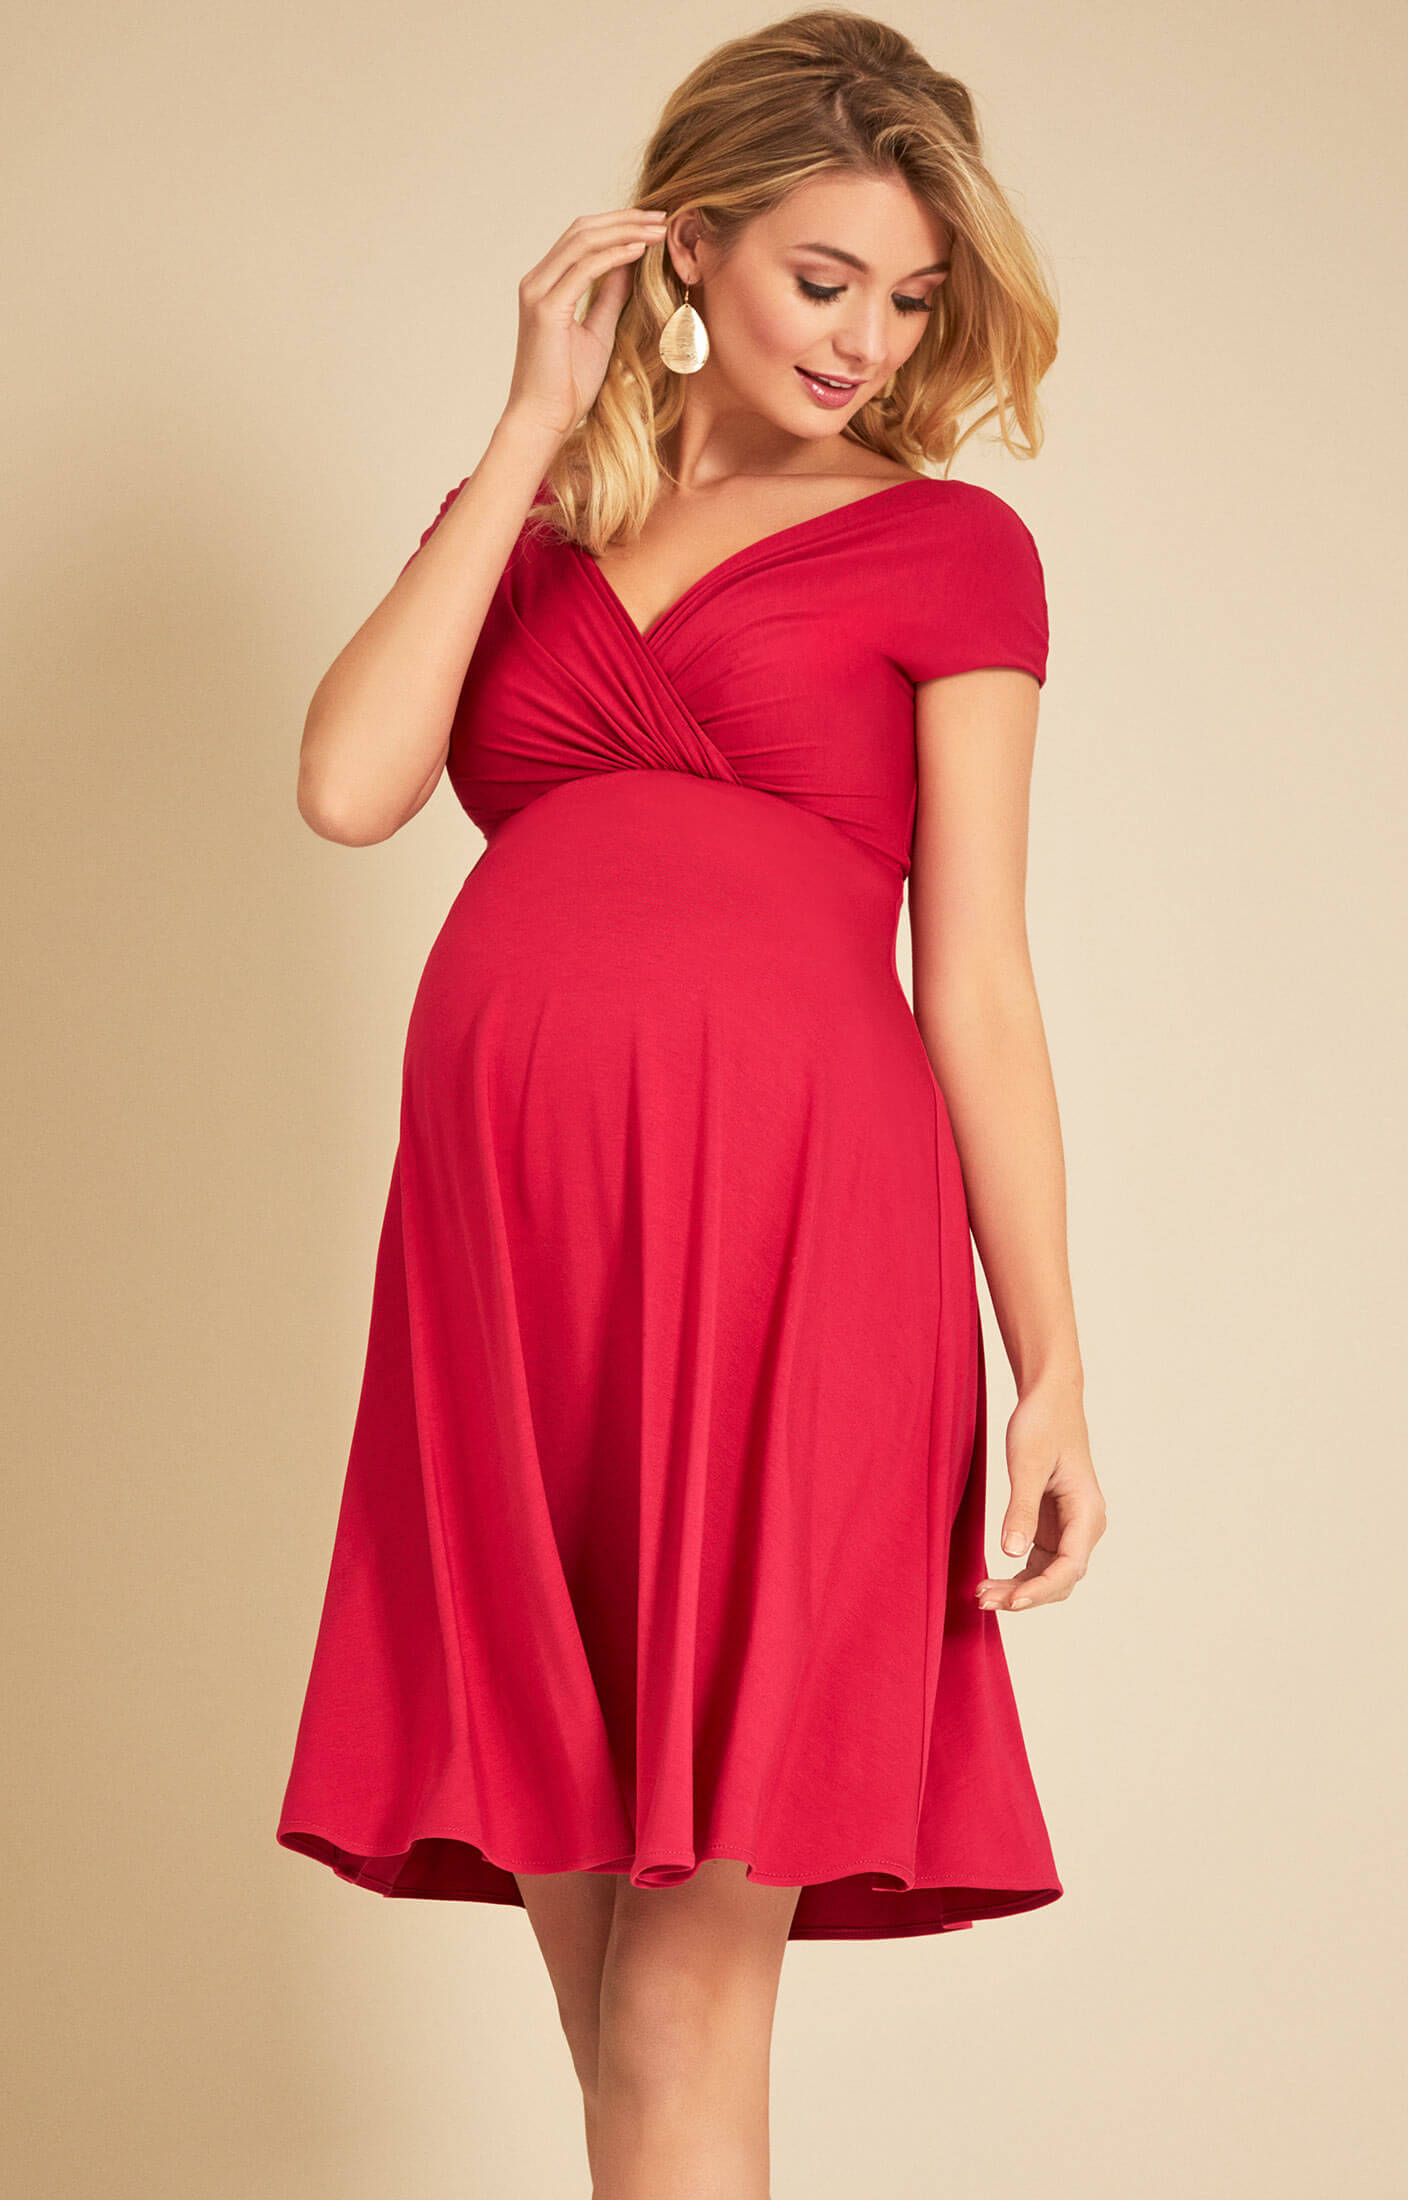 bright red maternity dress